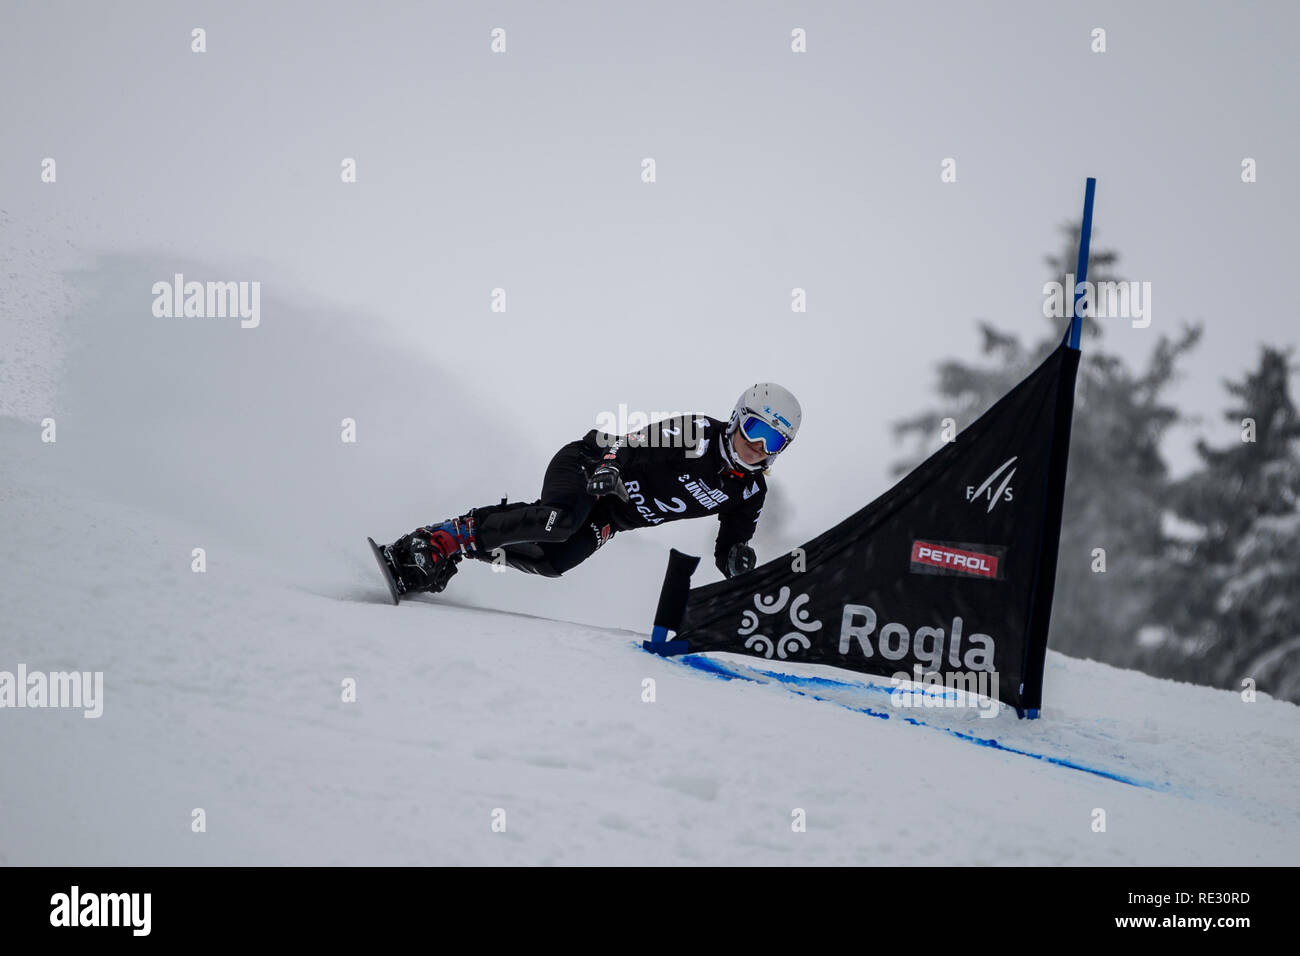 Rogla, Slovenia. 19th Jan 2019. Selina Joerg of Germany competes during the FIS Snowboard Ladies' Parallel Giant Slalom World Cup race in Rogla, Slovenia on January 19, 2019. Photo: Jure Makovec Credit: Jure Makovec/Alamy Live News Stock Photo